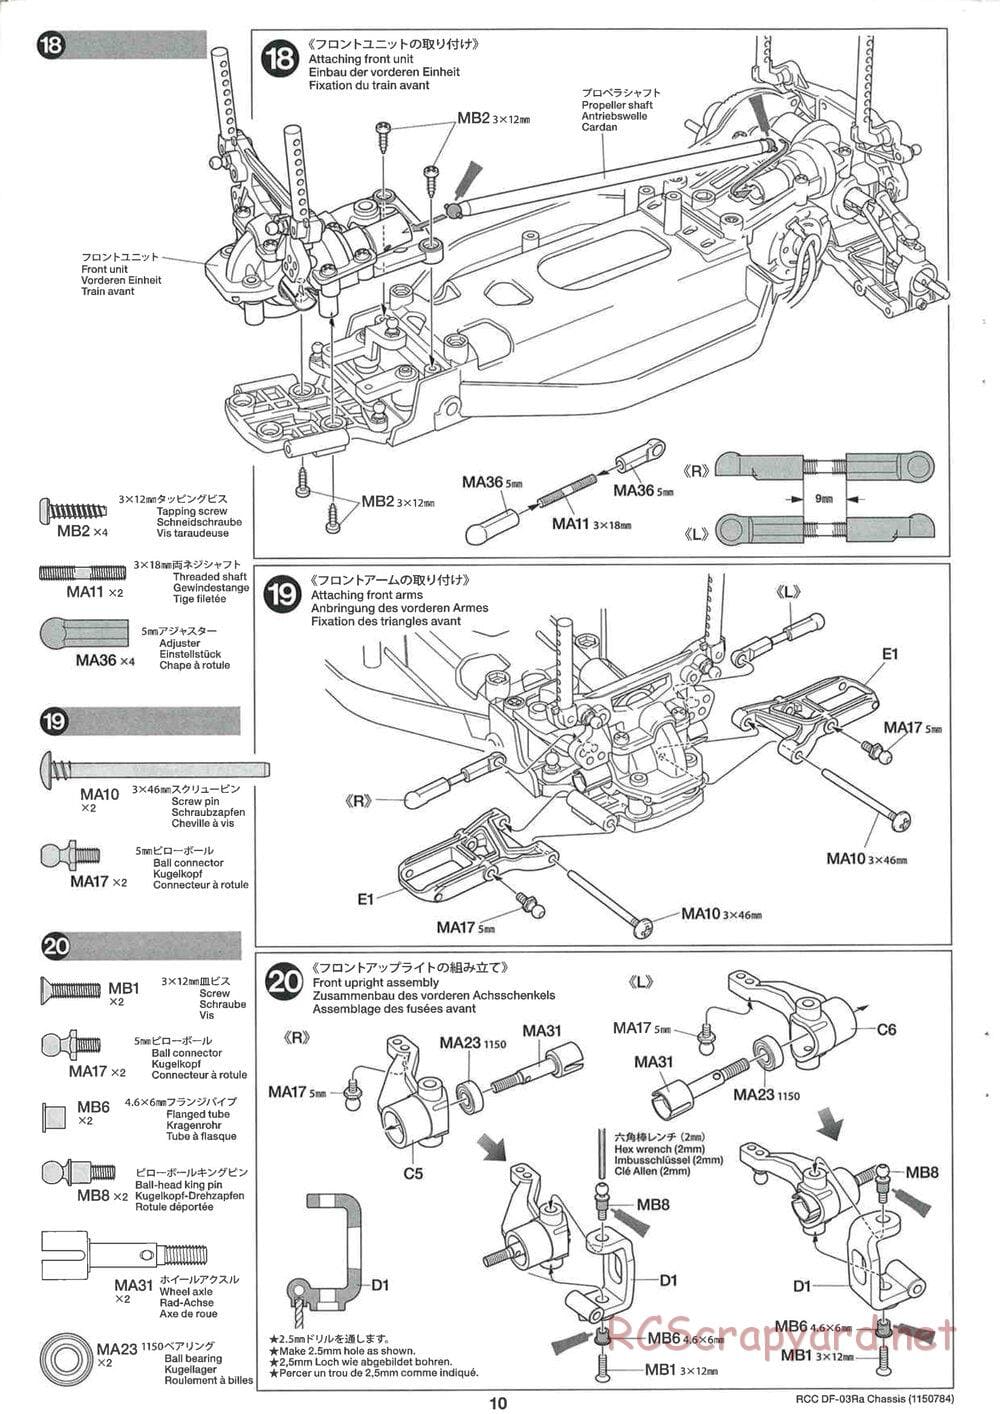 Tamiya - DF-03Ra Chassis - Manual - Page 10